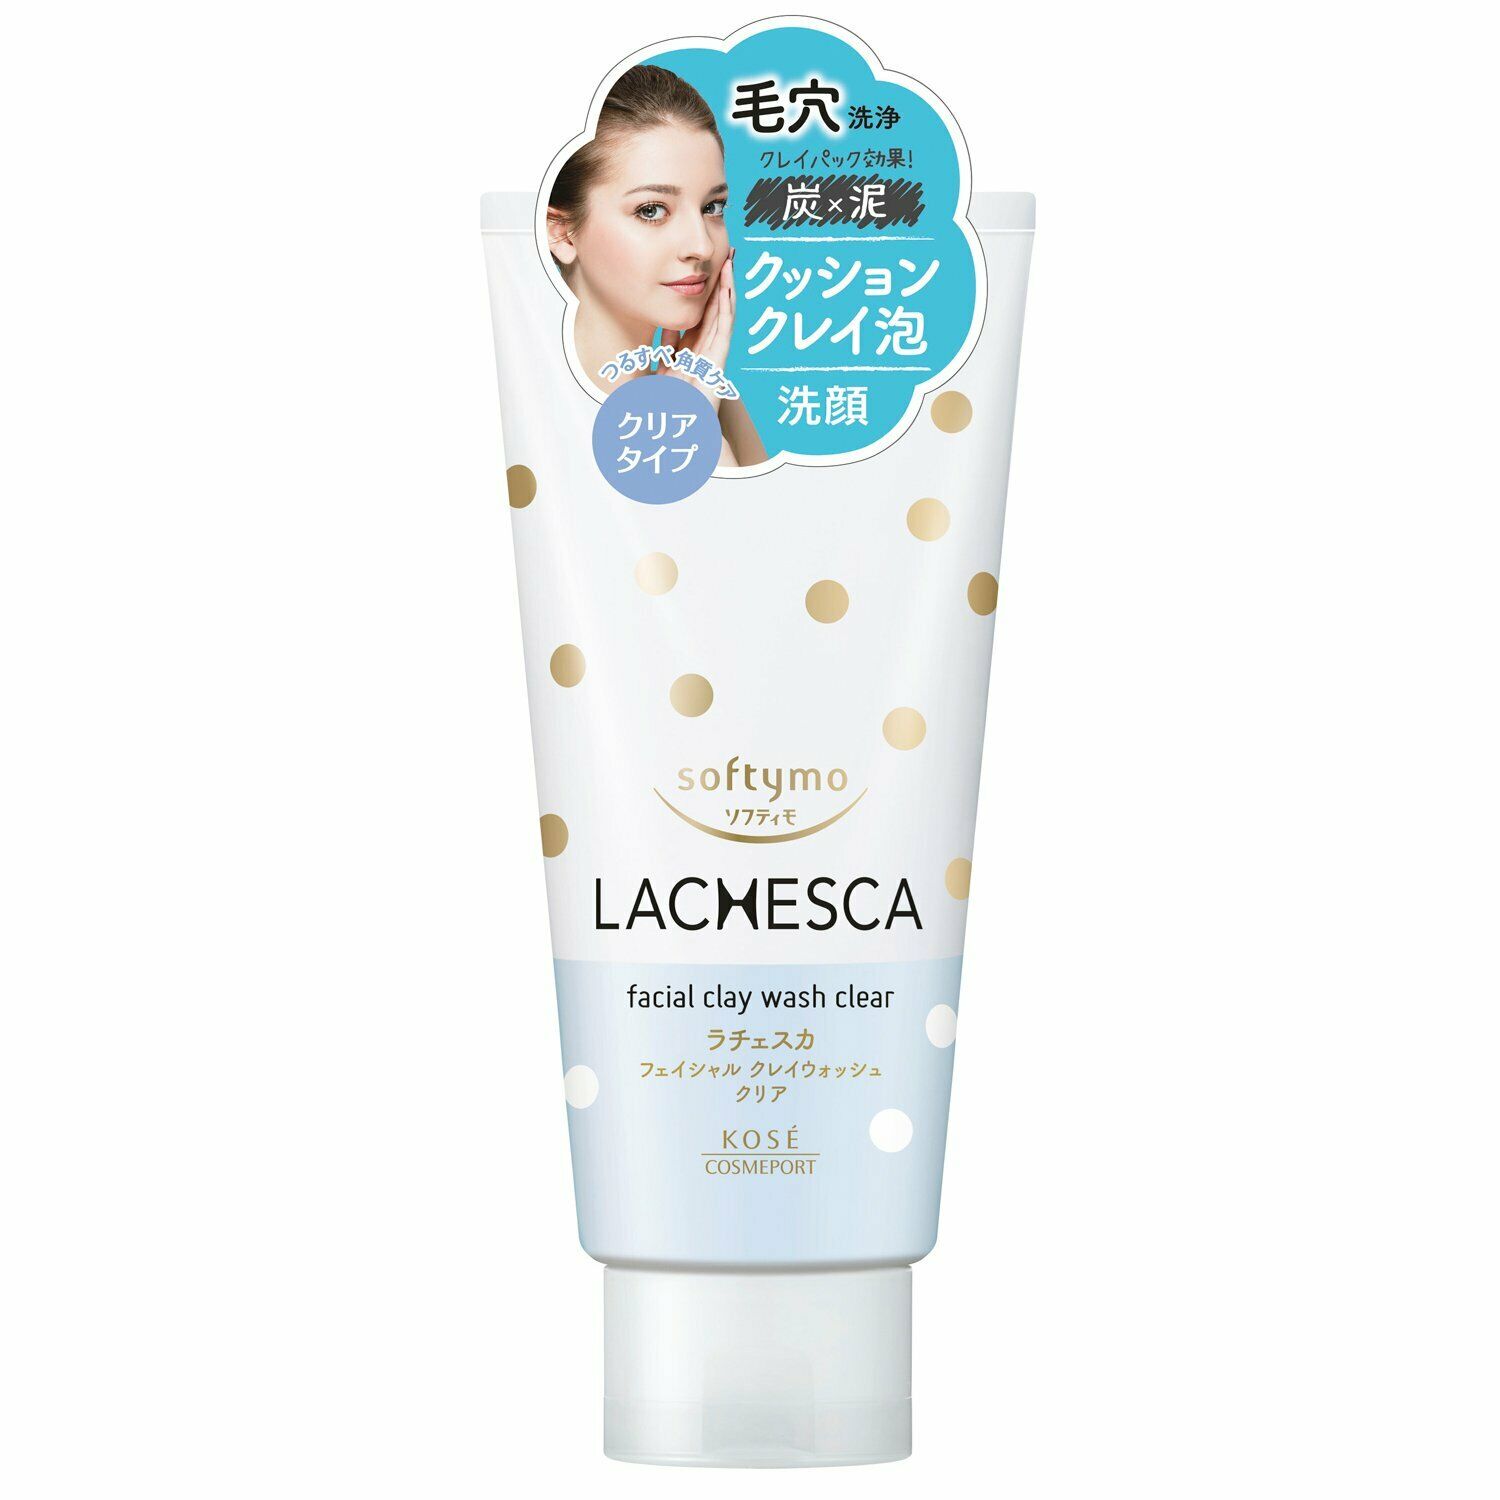 Kose Softymo Lachesca Facial Clay Wash Clear